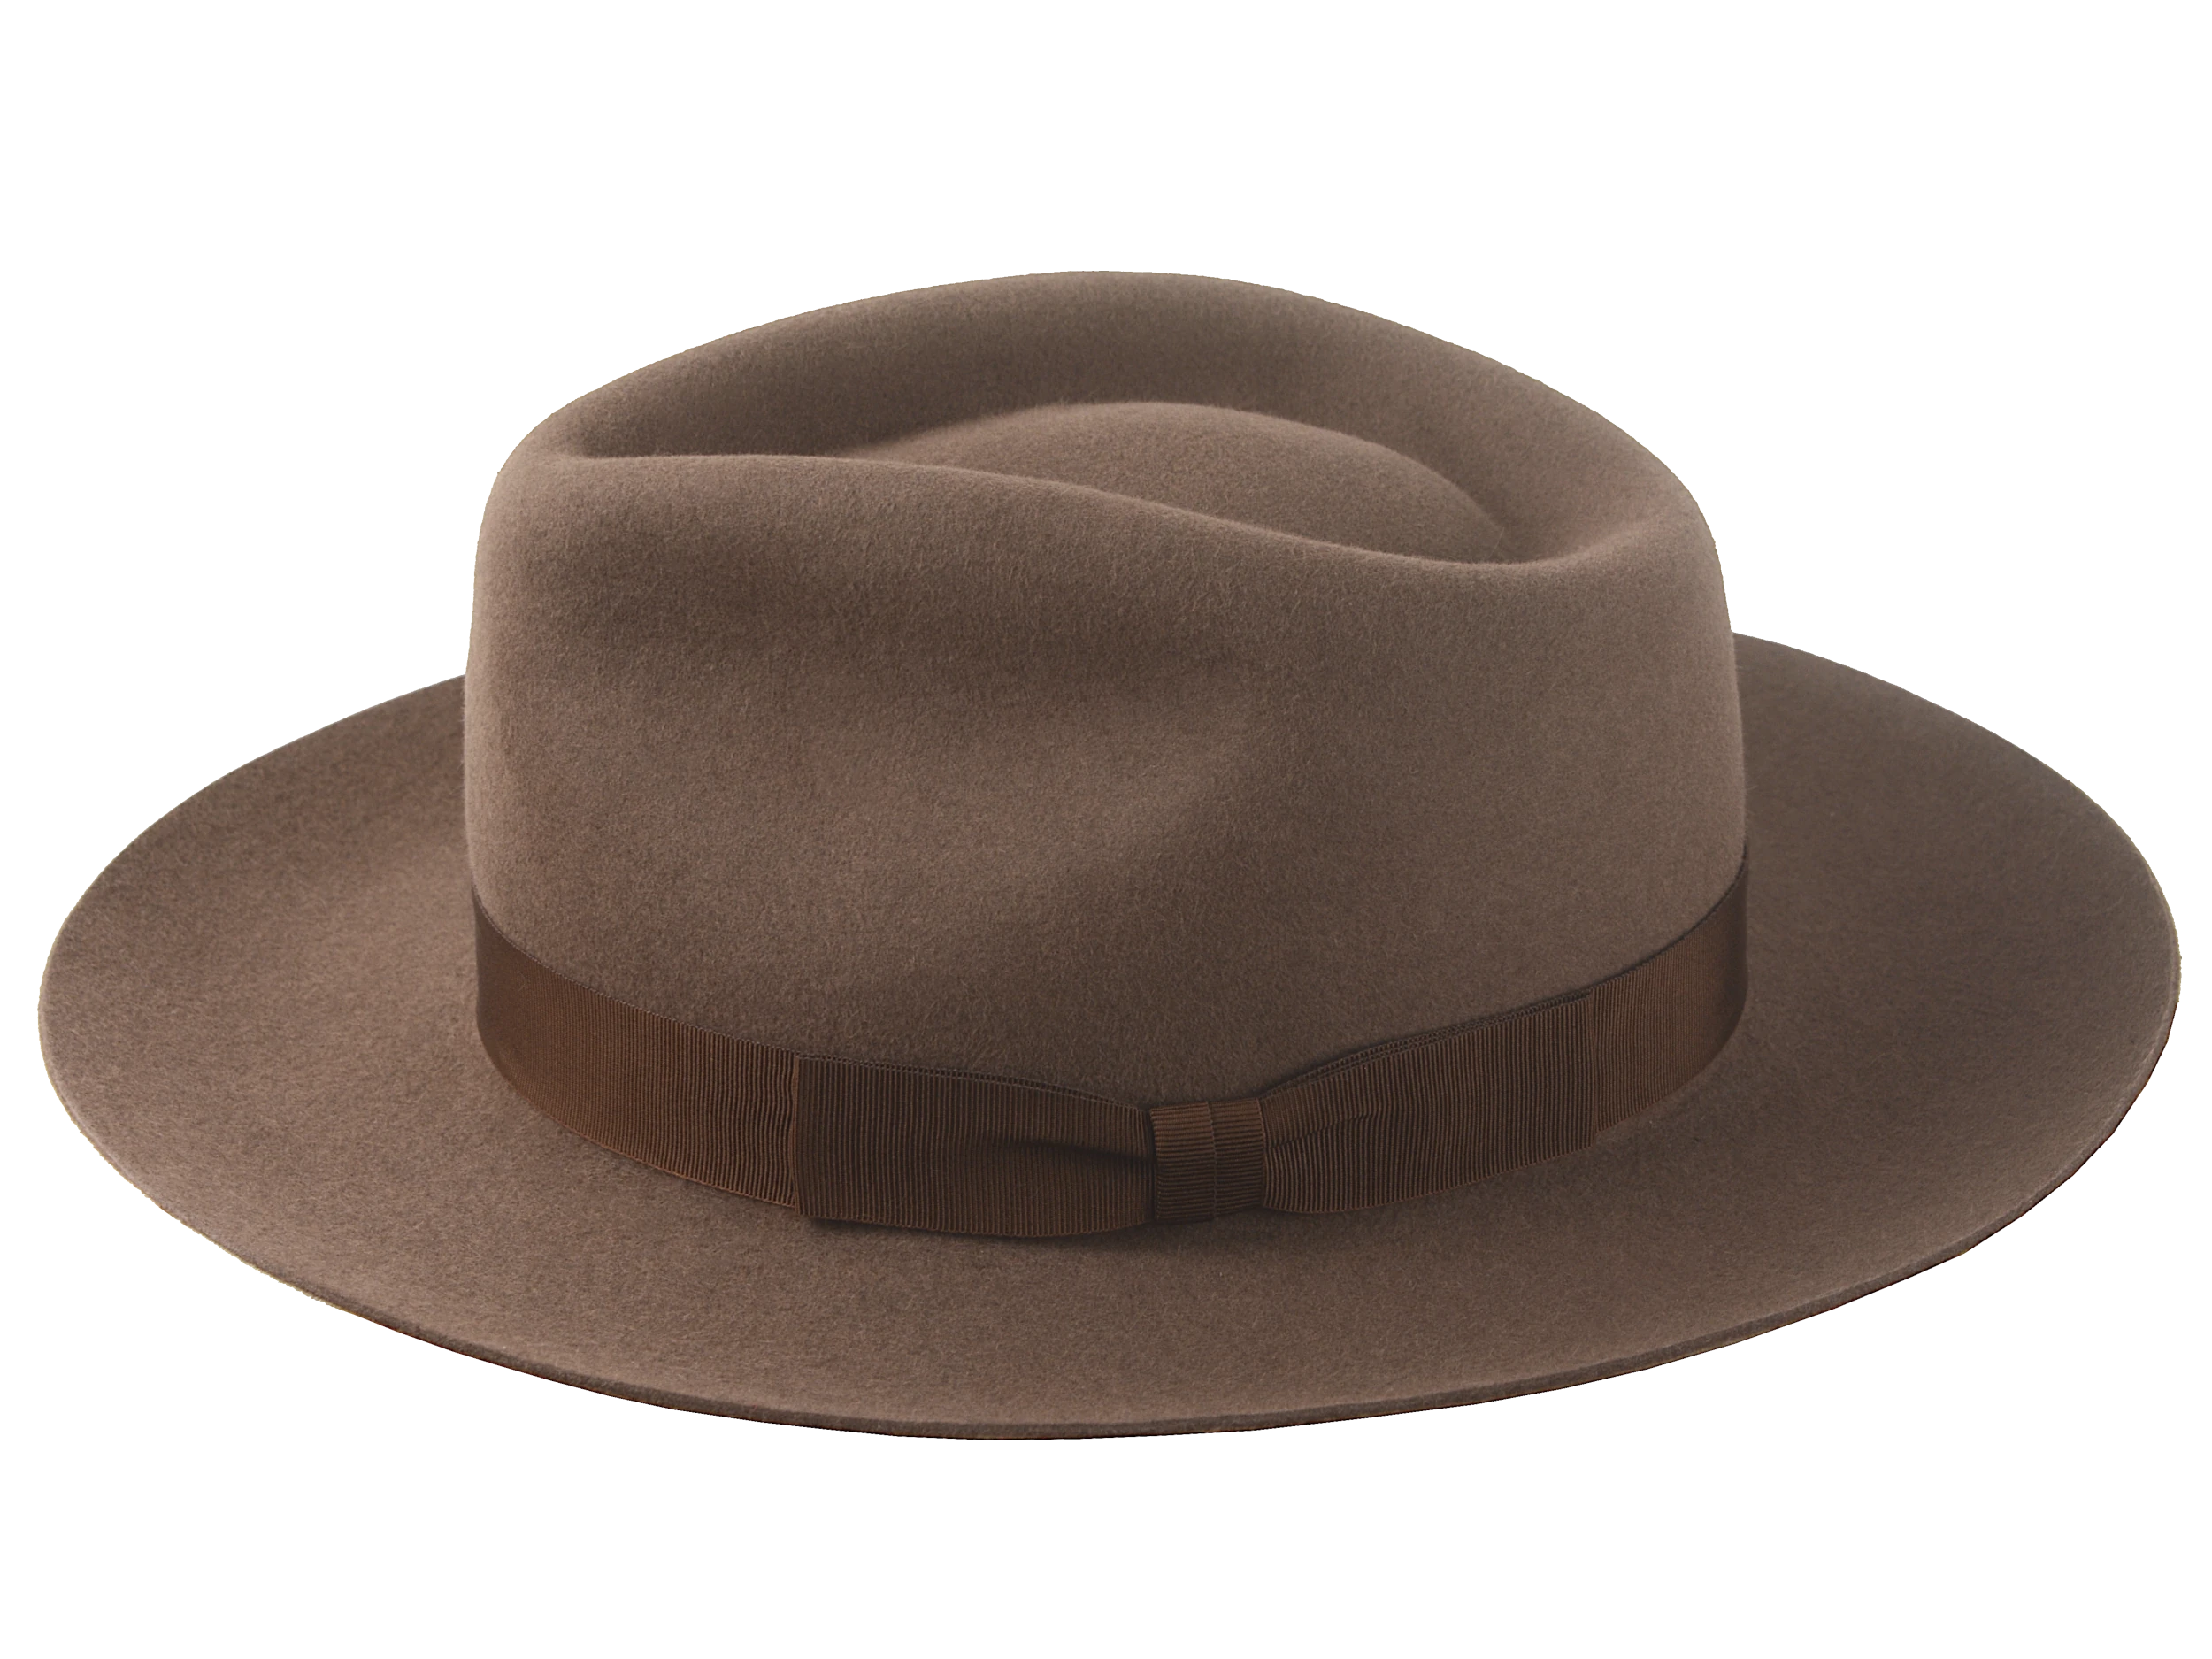 The Pathfinder: Side angle showcasing the syrup hatband on taupe felt | Agnoulita Hats